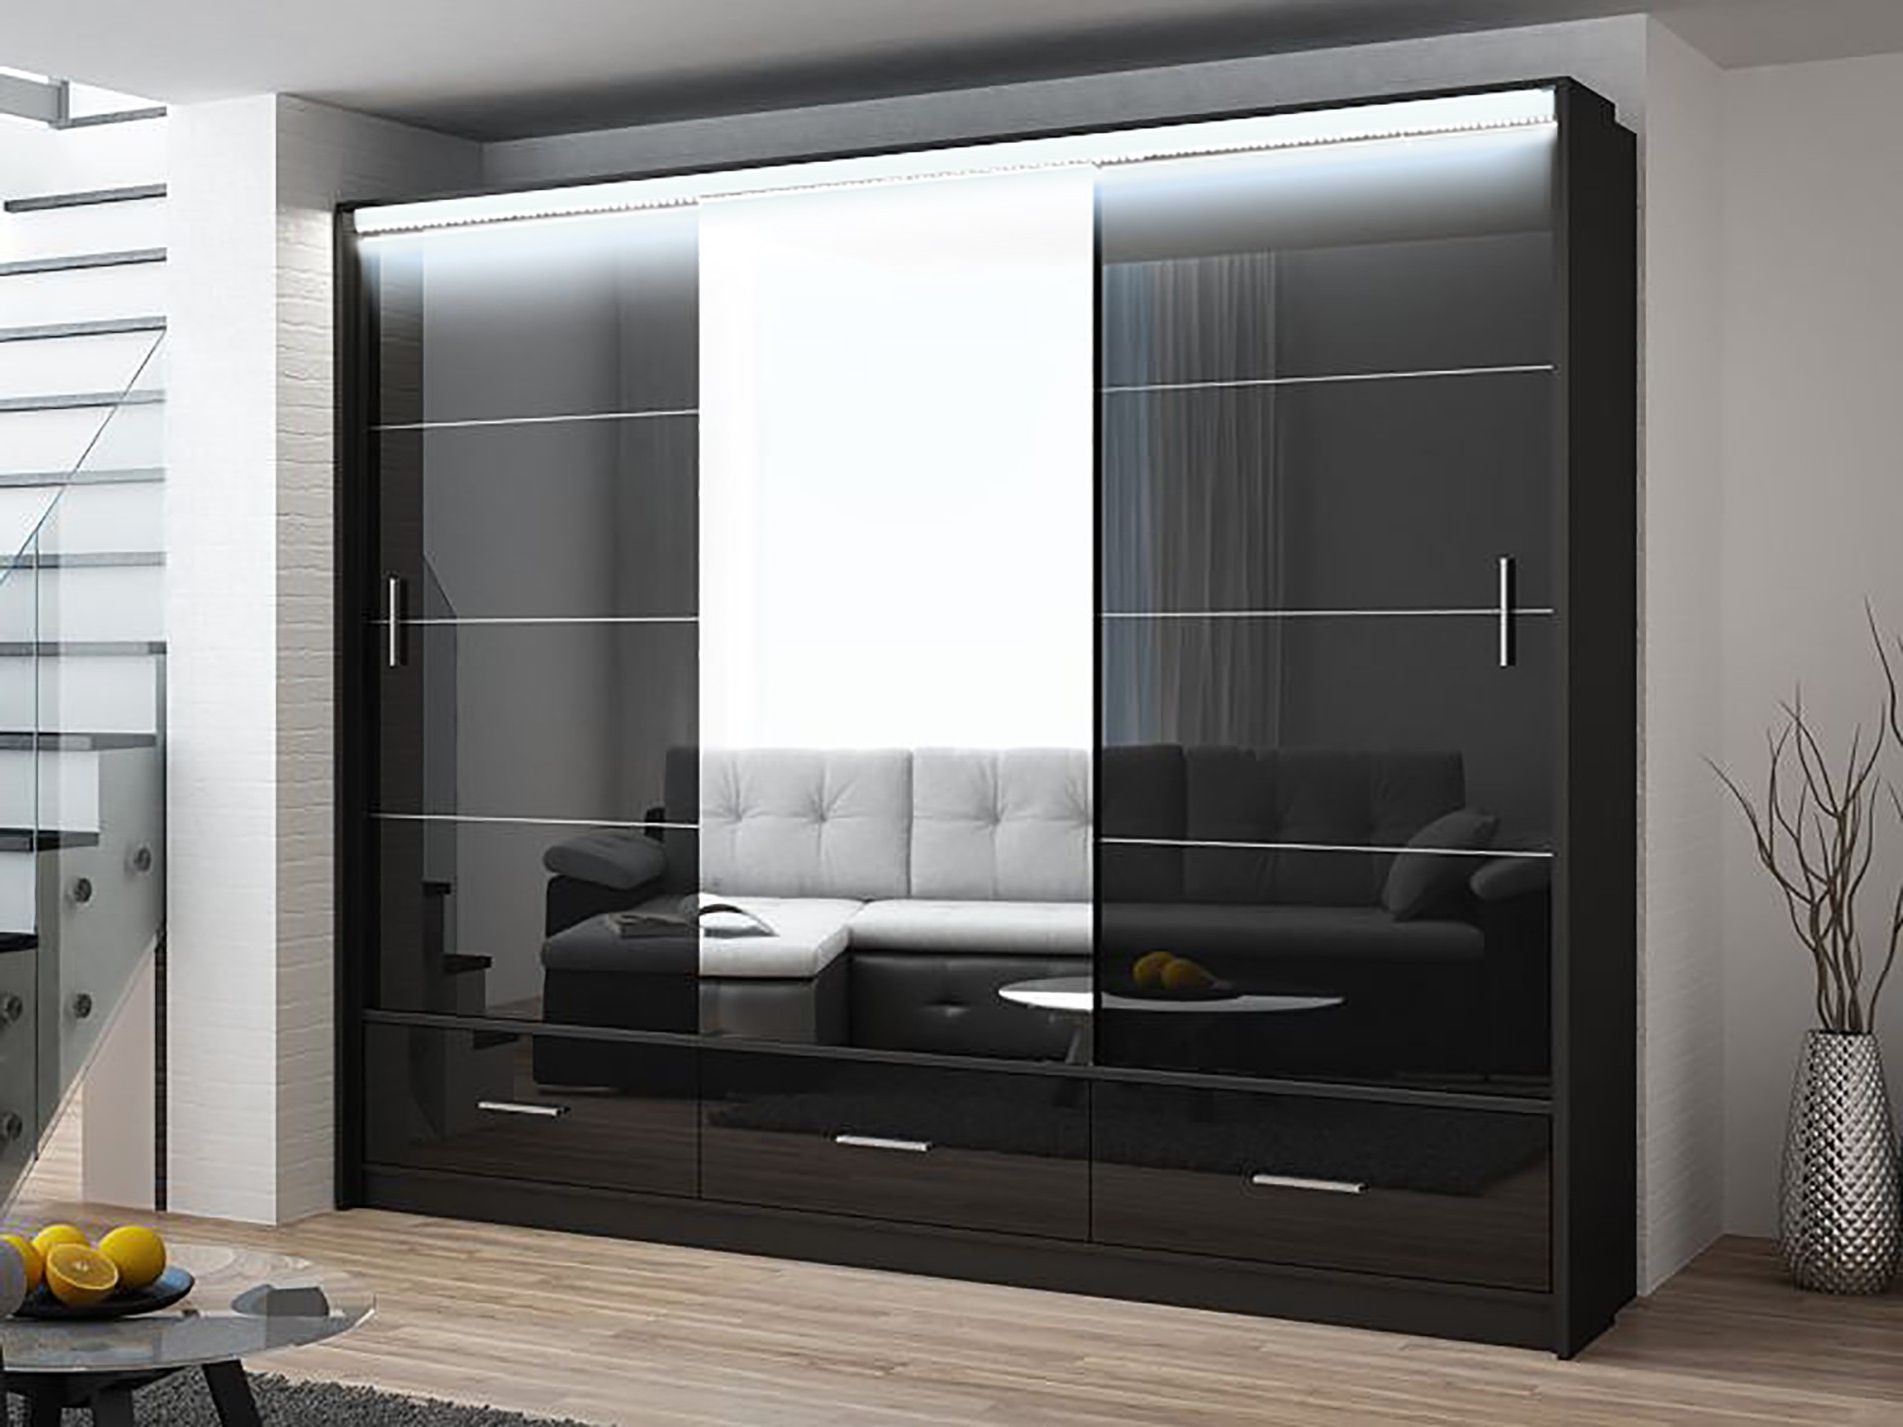 Marsylia Wardrobe, Black Gloss + Mirror 255cm ,hull Furniture With Regard To Black High Gloss Wardrobes (View 14 of 20)